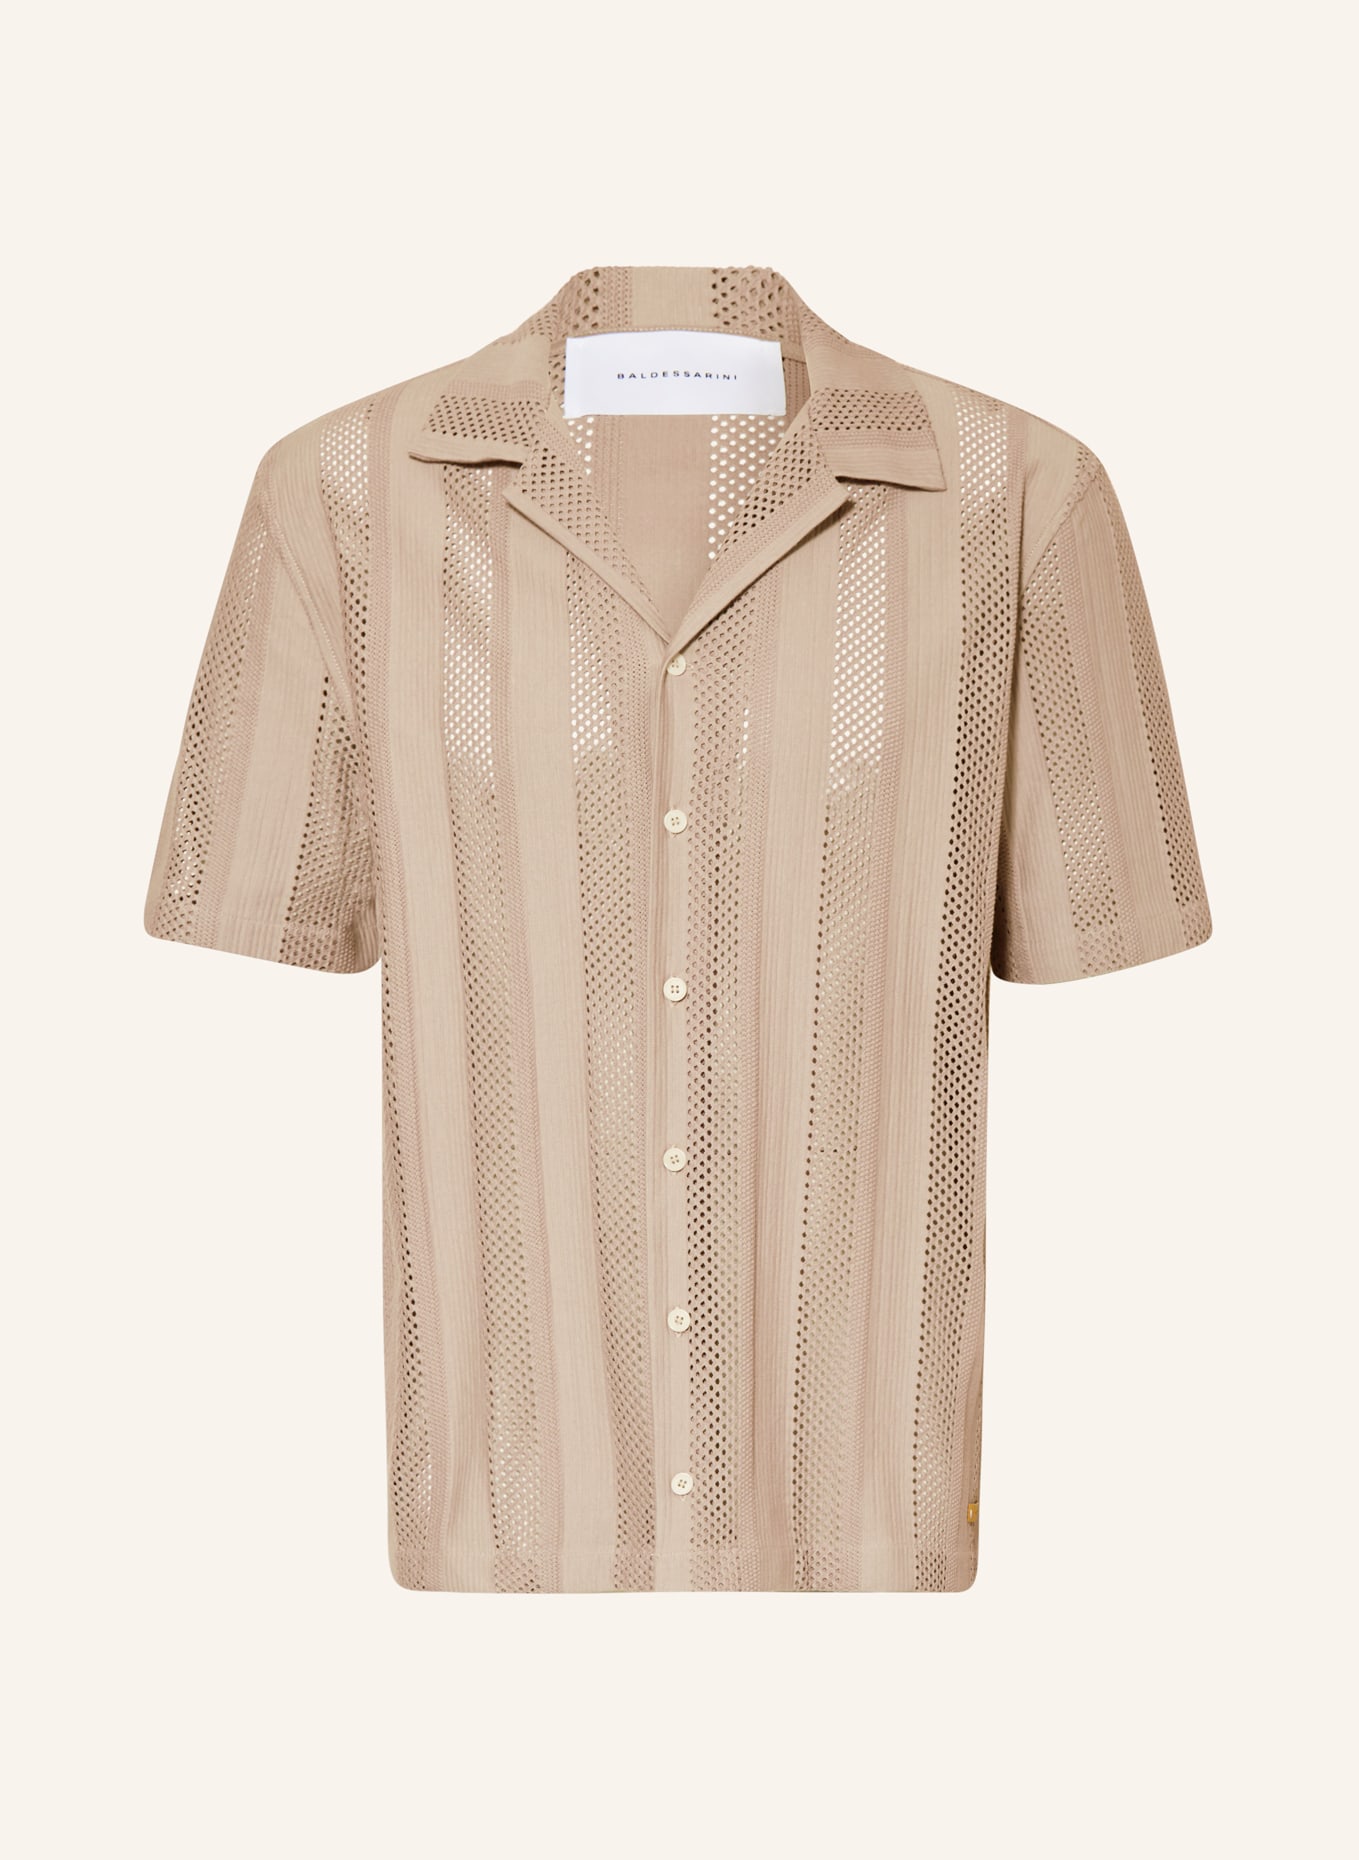 BALDESSARINI Strick-Resorthemd PIKO, Farbe: 8105 brownie (Bild 1)